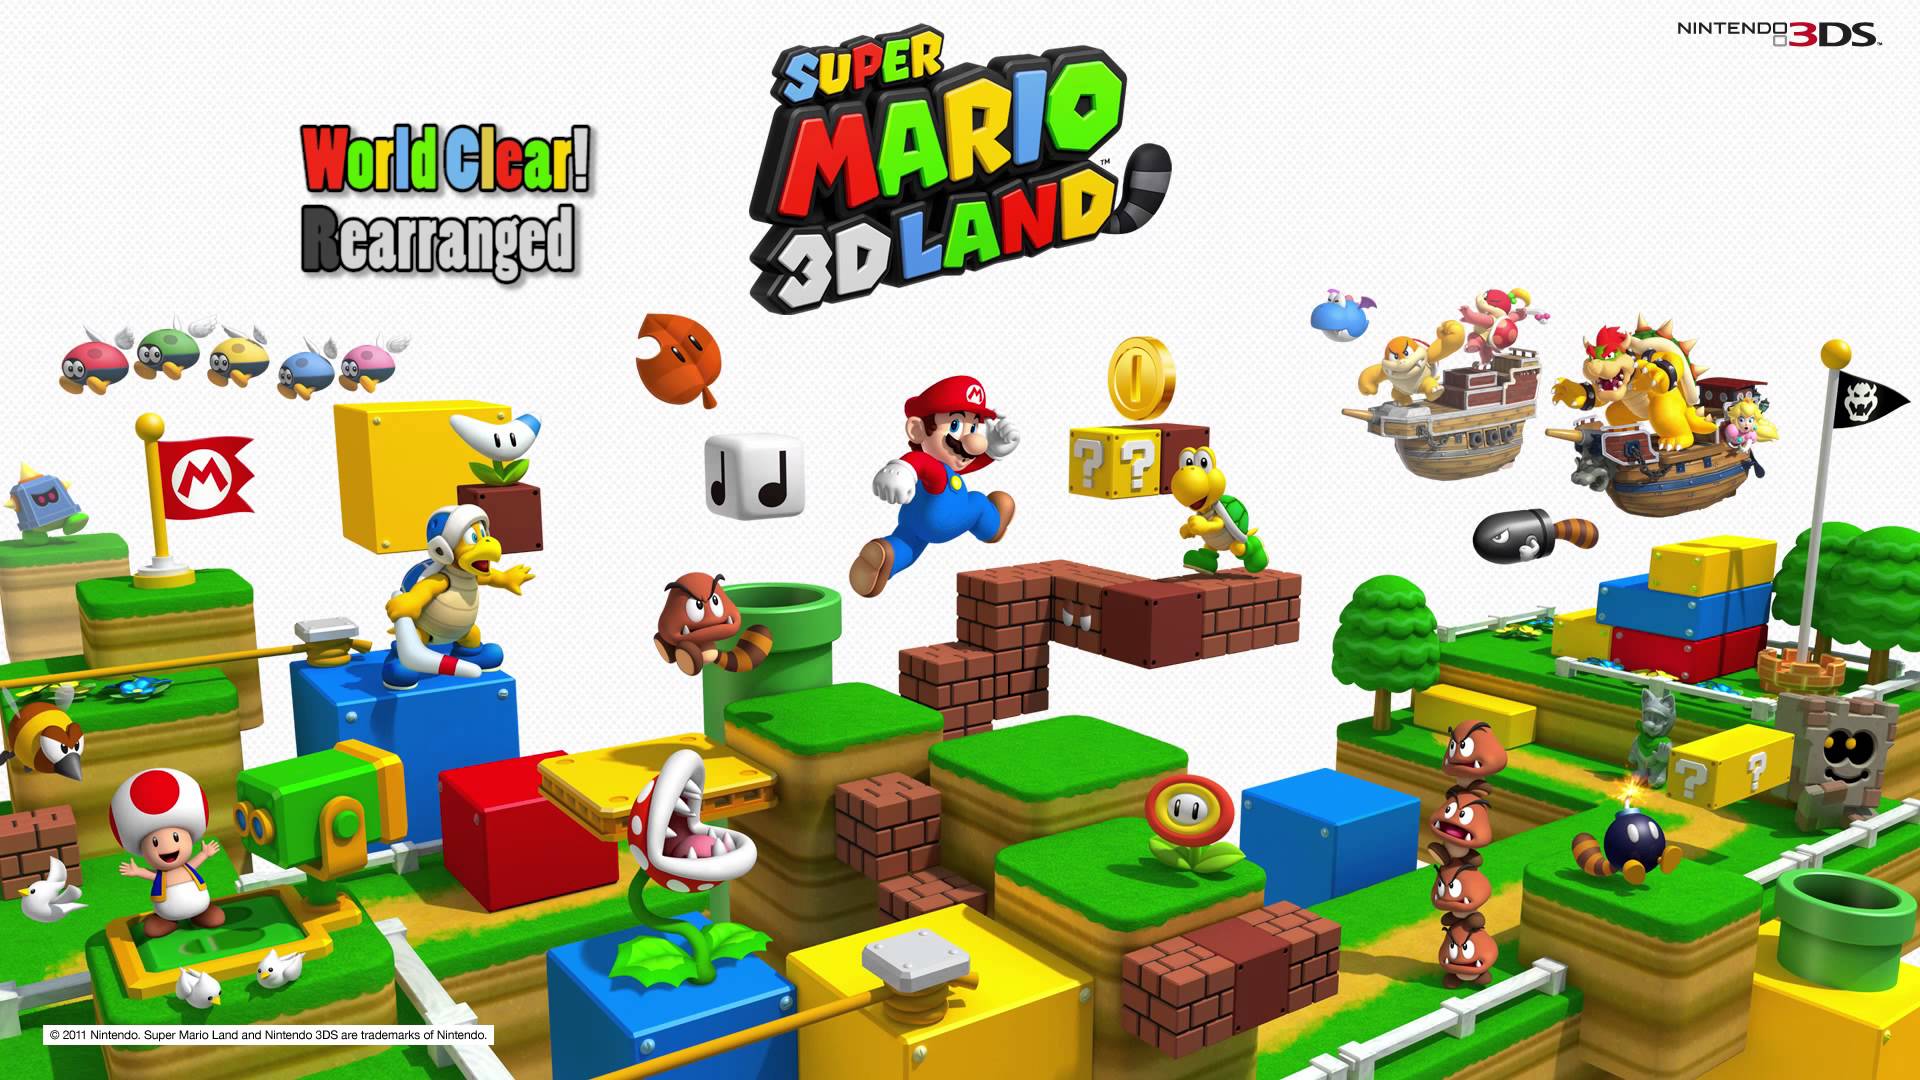 Super Mario 3D Land HD Wallpapers 7